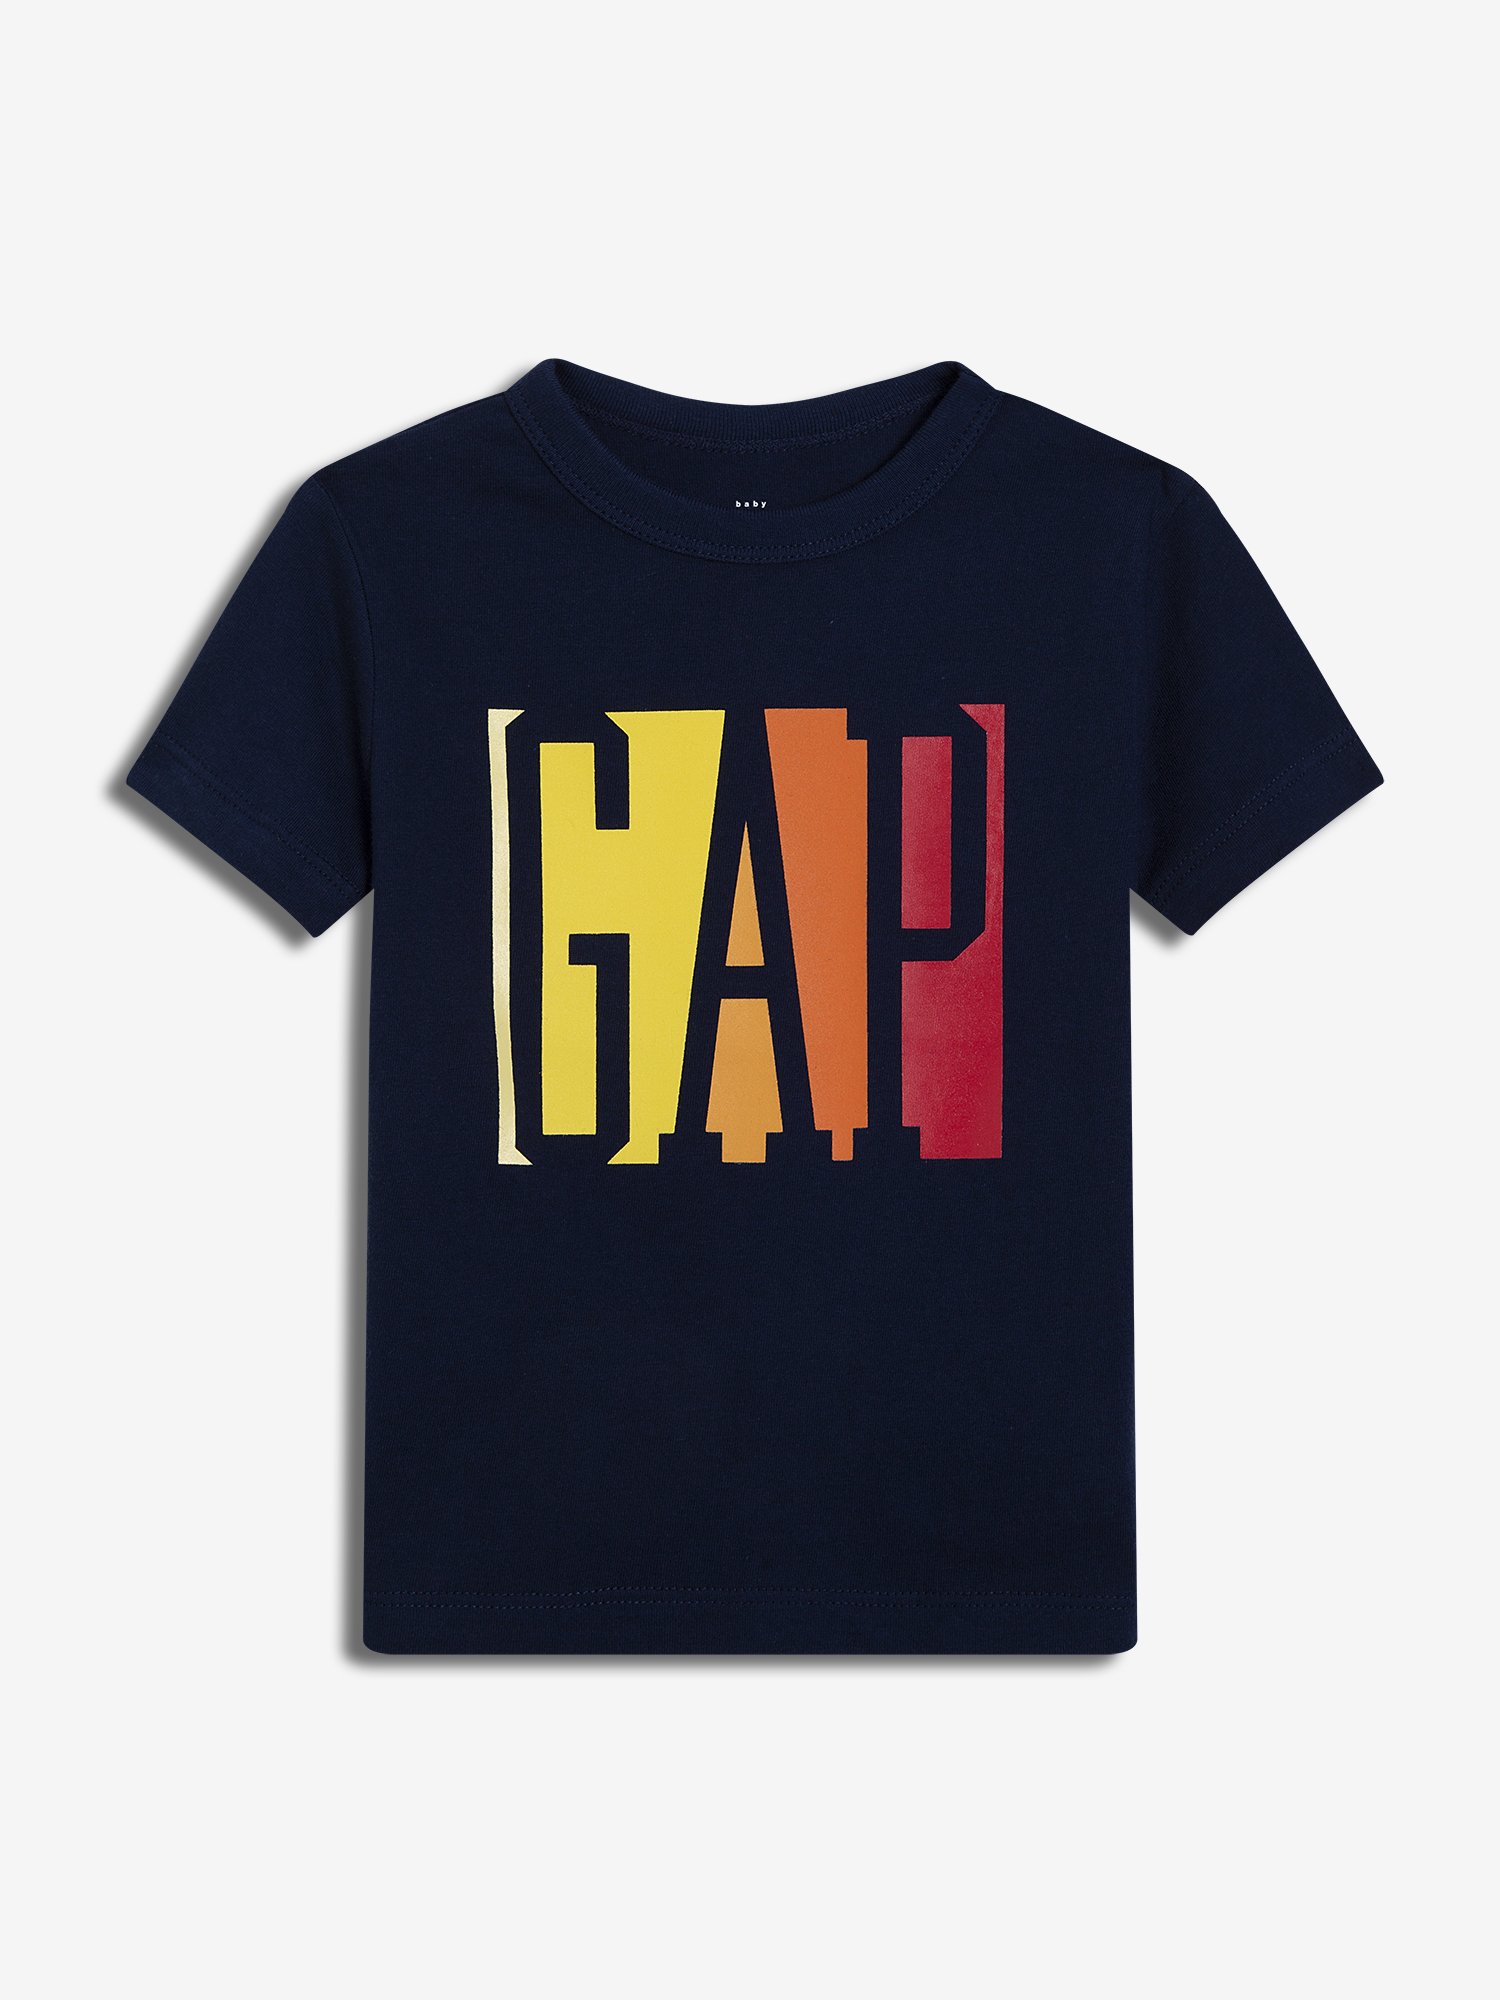 Erkek Bebek Gap Logo T-shirt product image